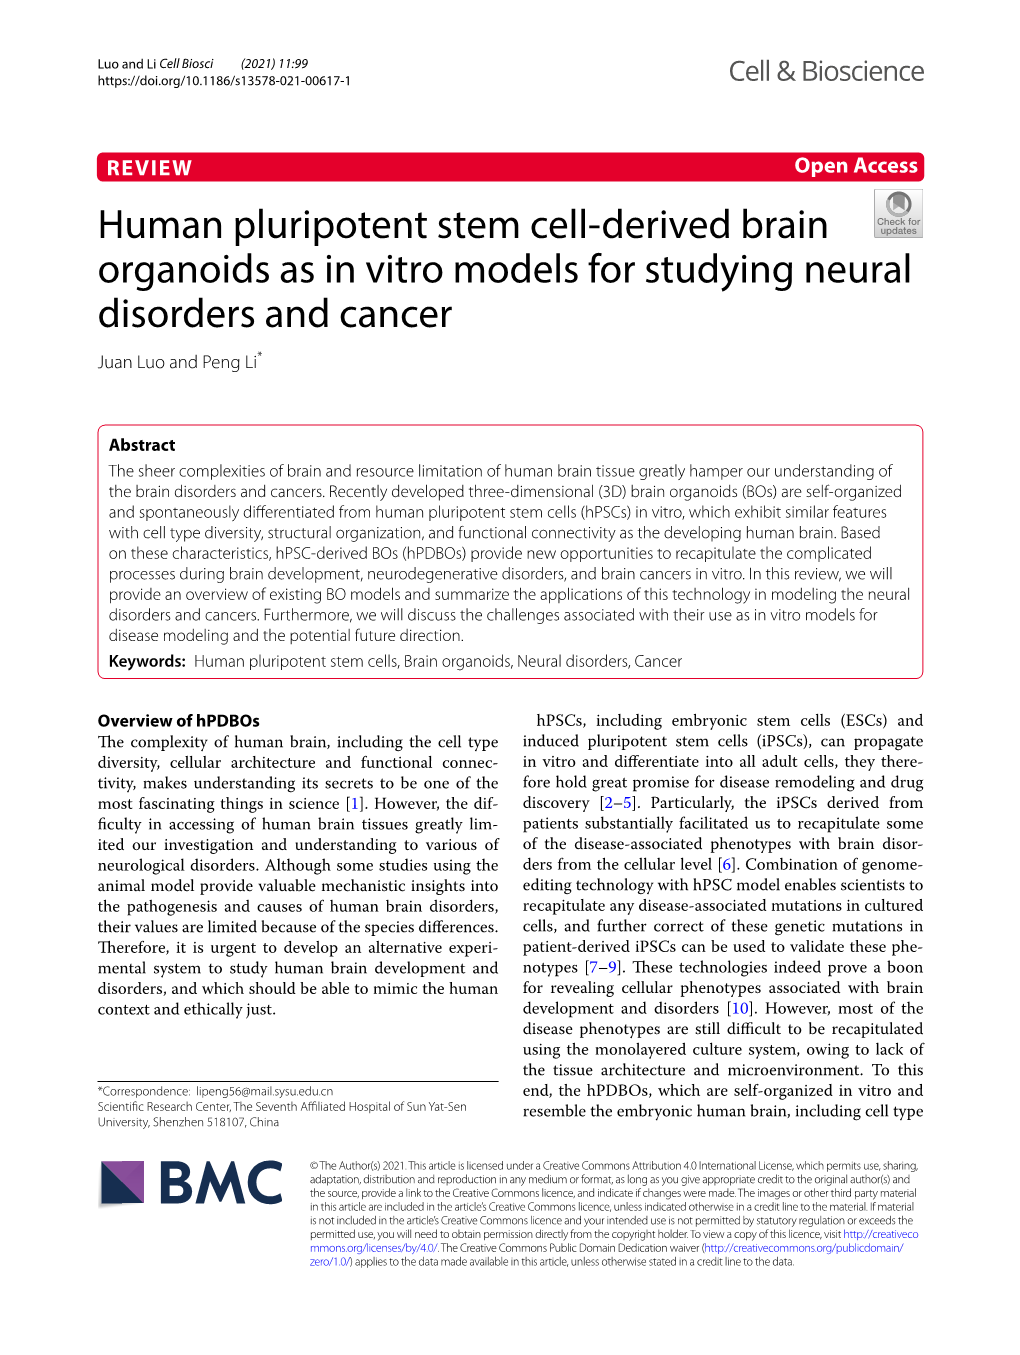 Human Pluripotent Stem Cell-Derived Brain Organoids As in Vitro Models